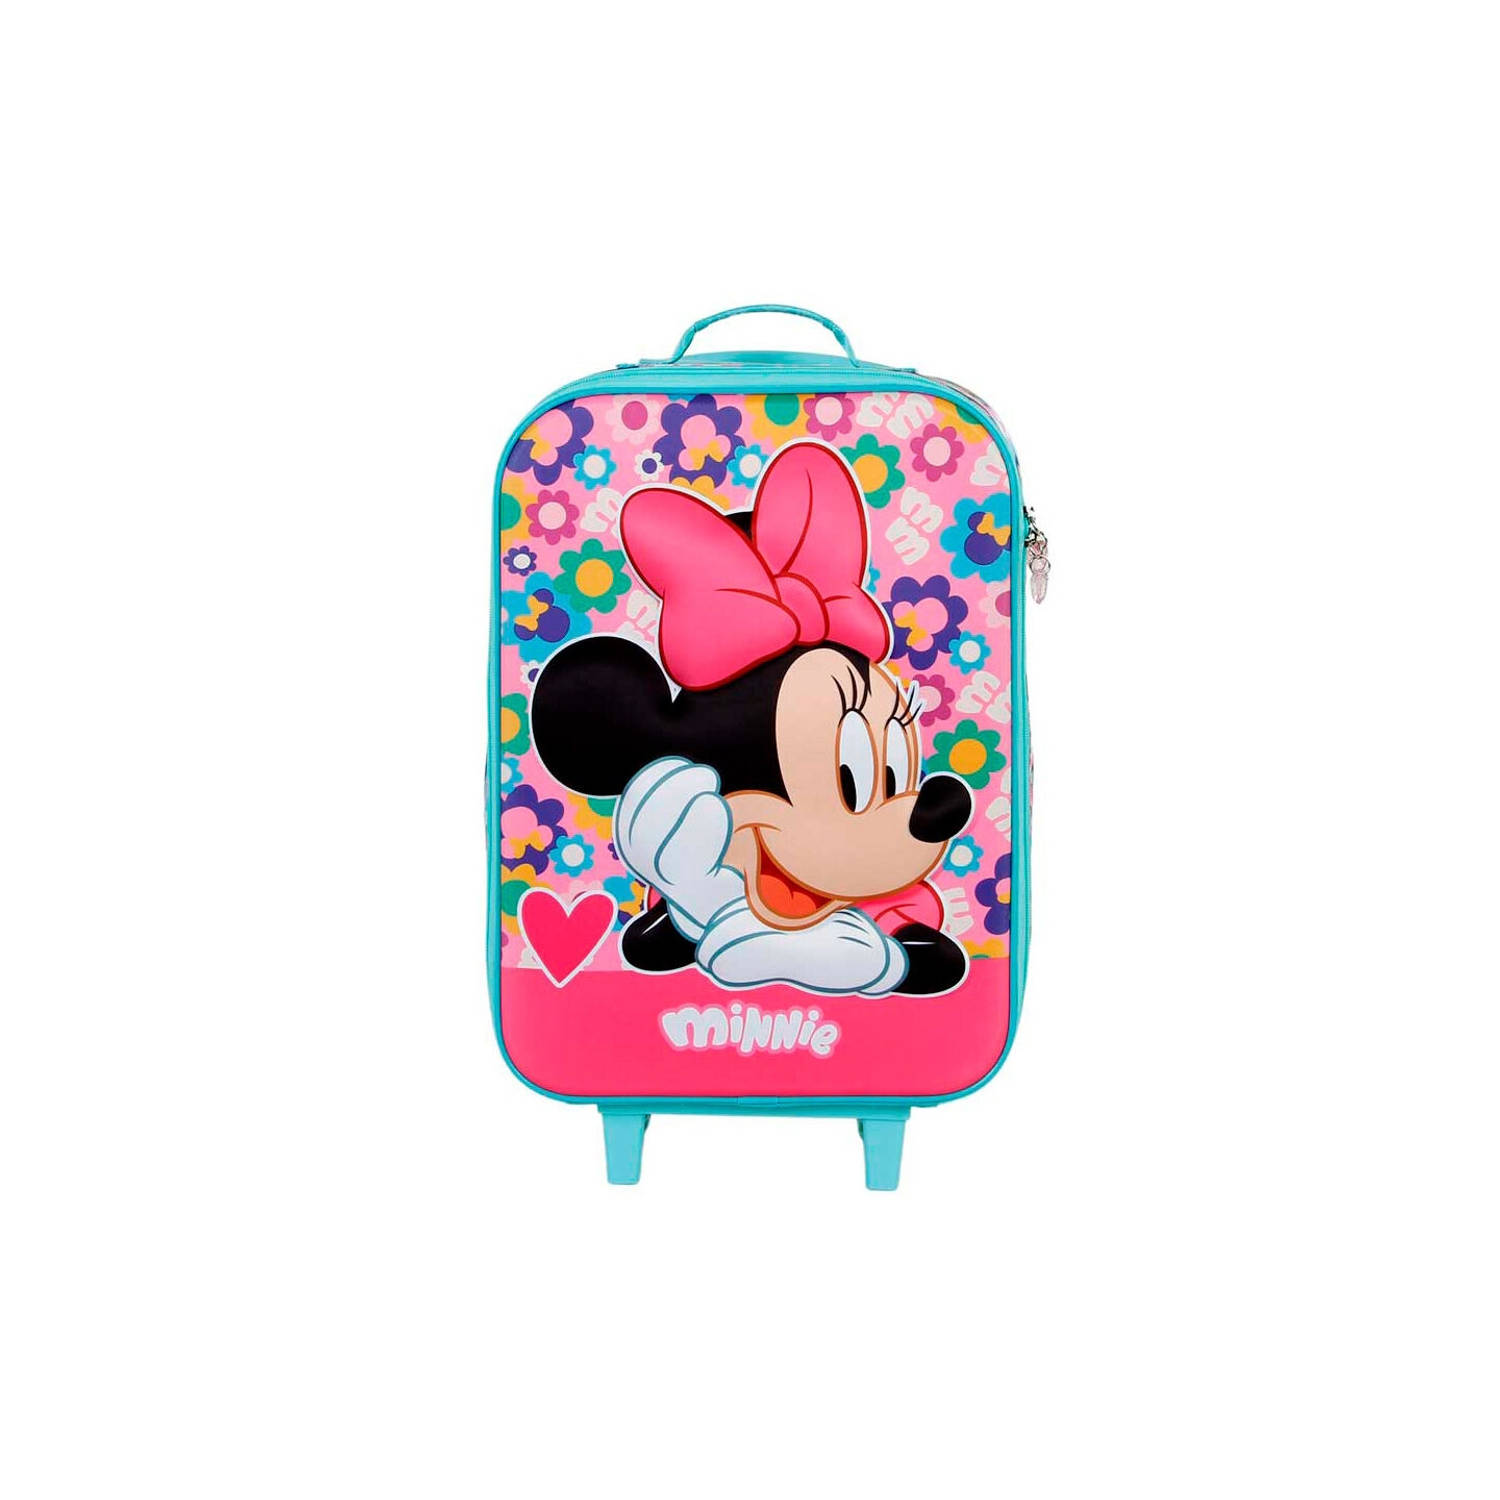 Minnie Mouse 3D Meisjes kindertrolley